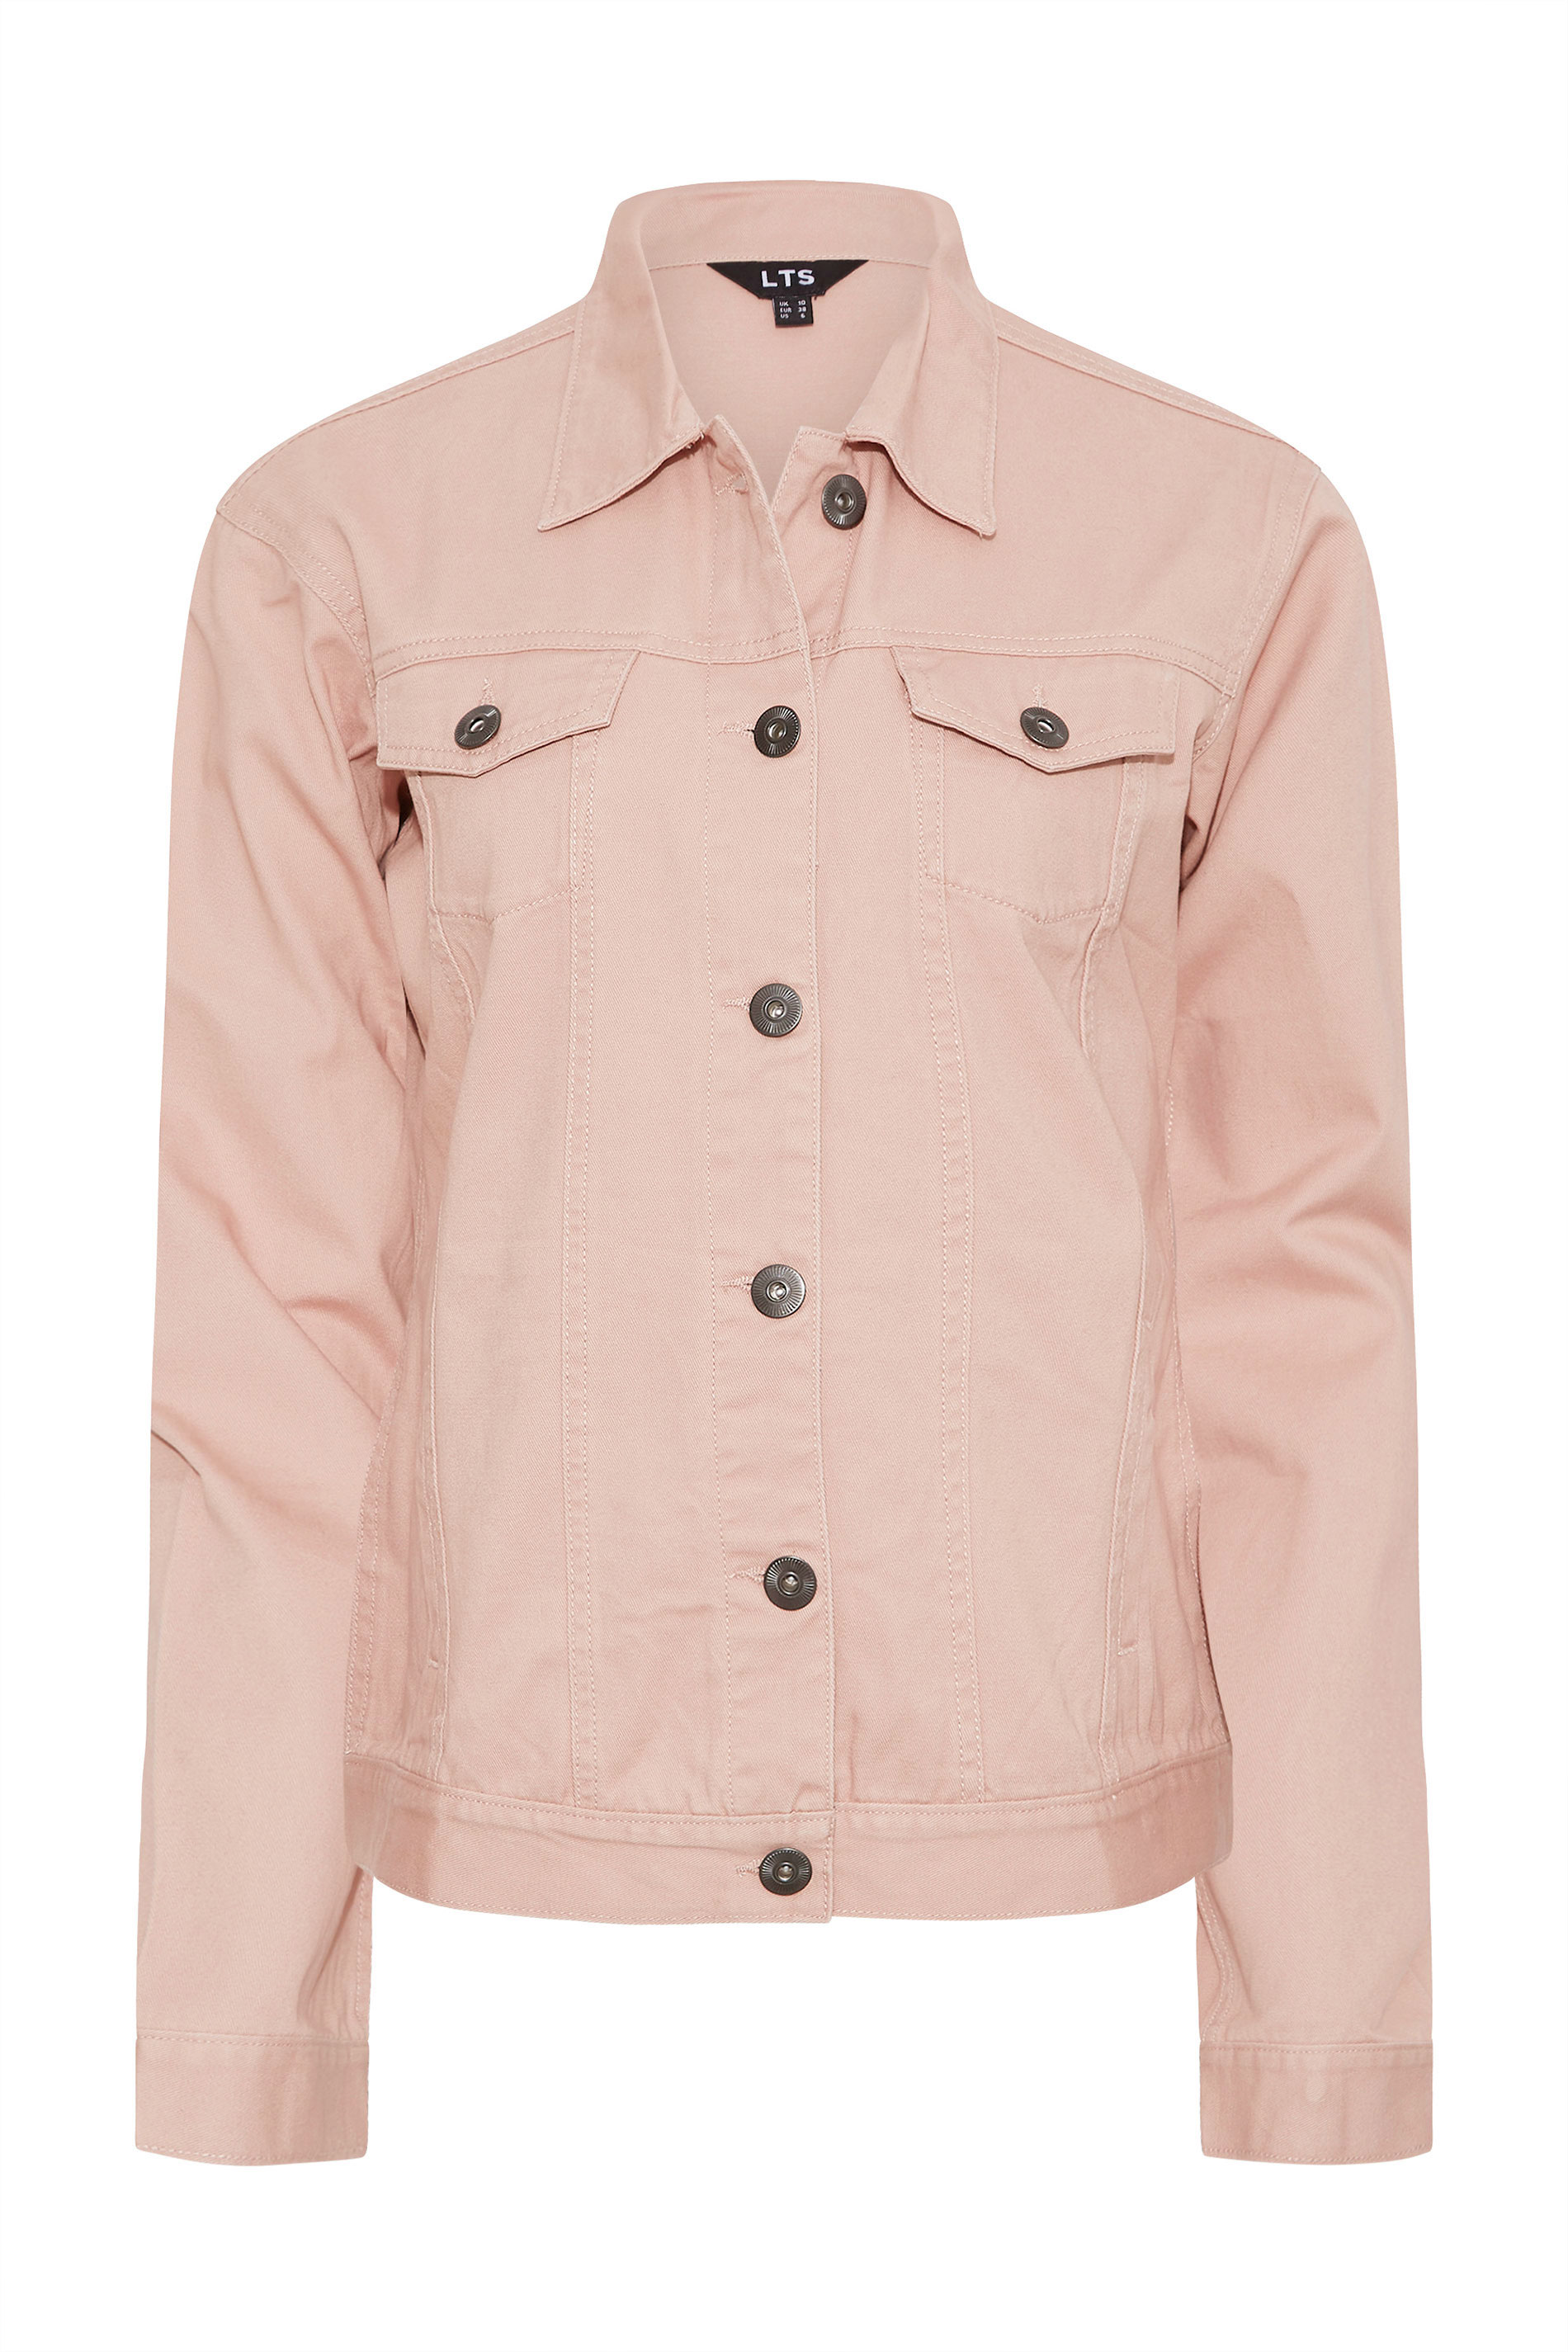 LTS Tall Women's Hot Pink Denim Jacket